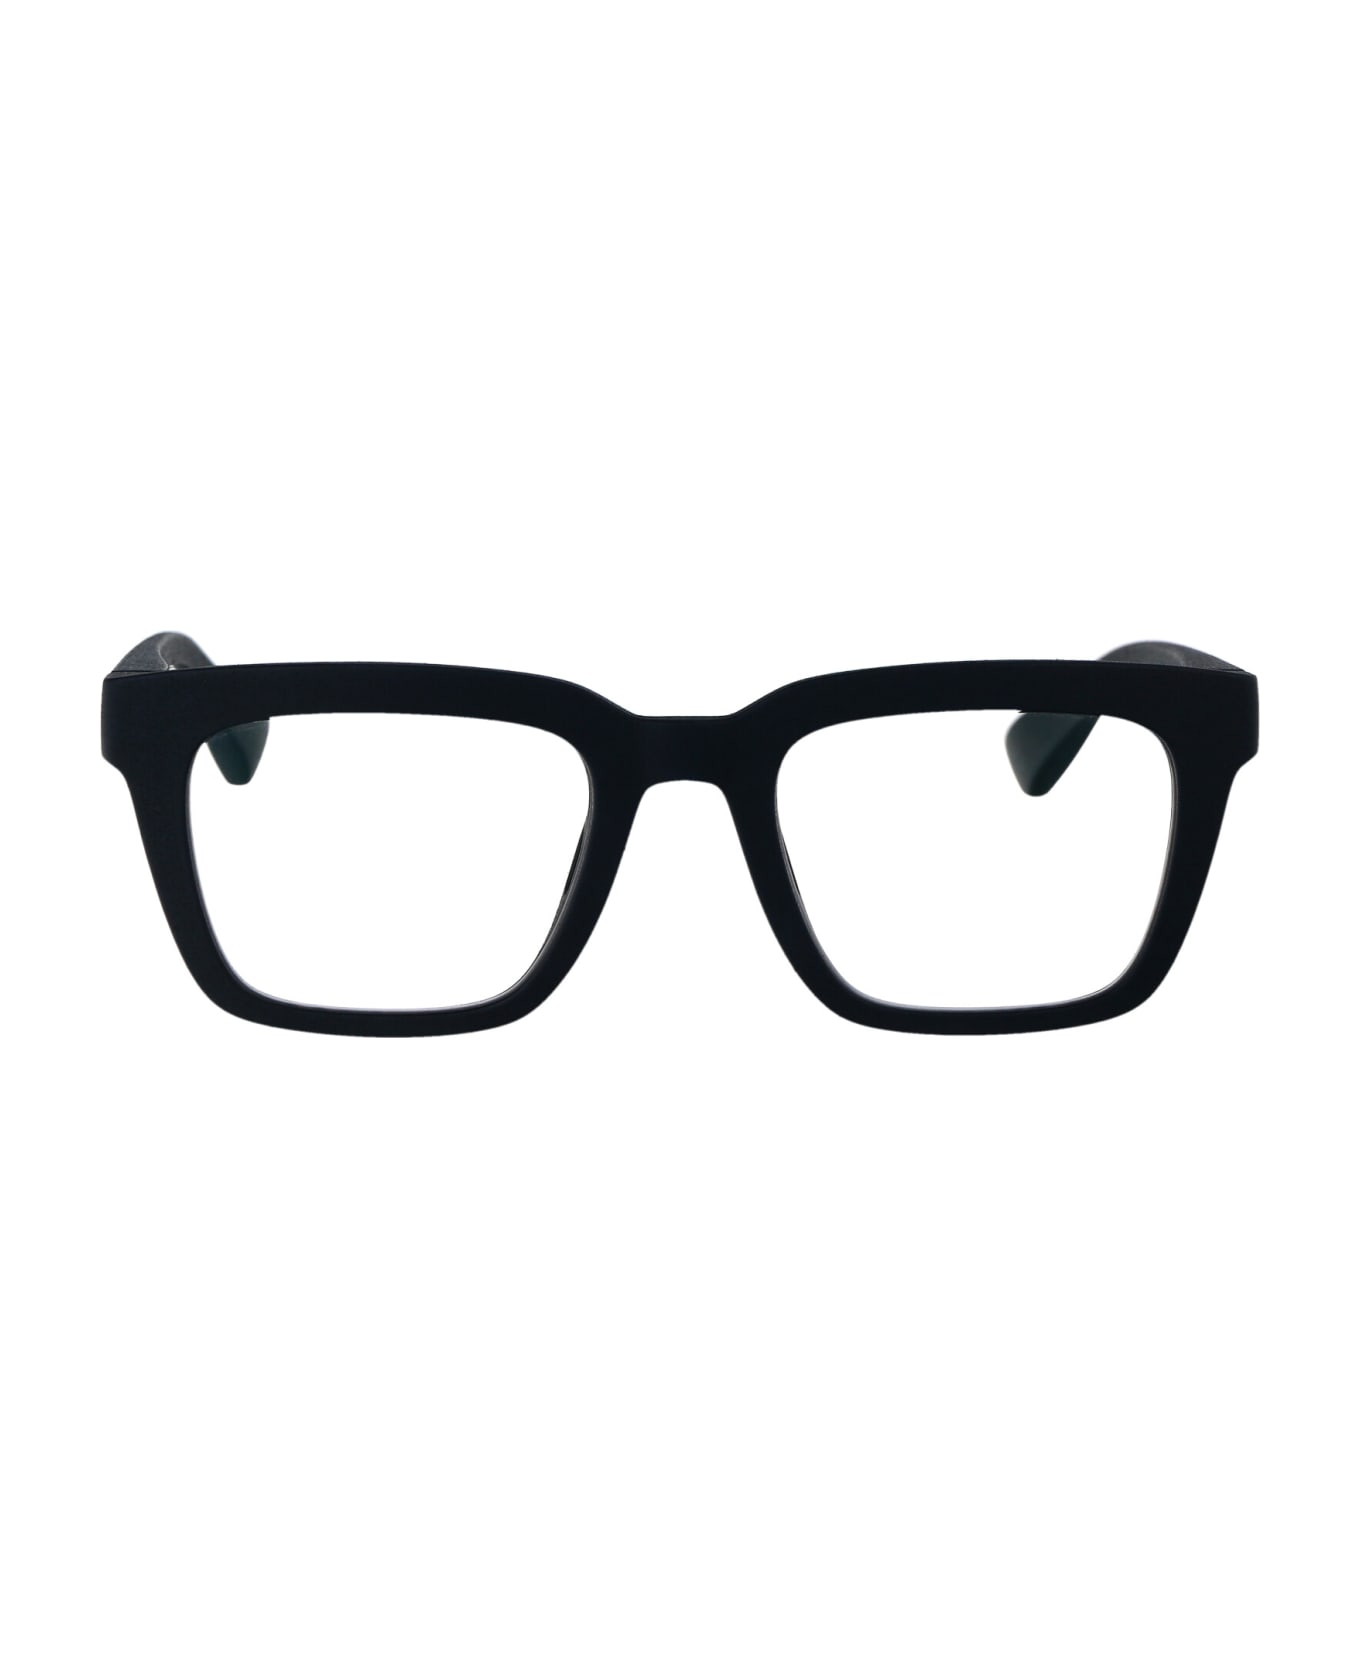 Mykita Souda Glasses - 346 MD34-Indigo Clear アイウェア